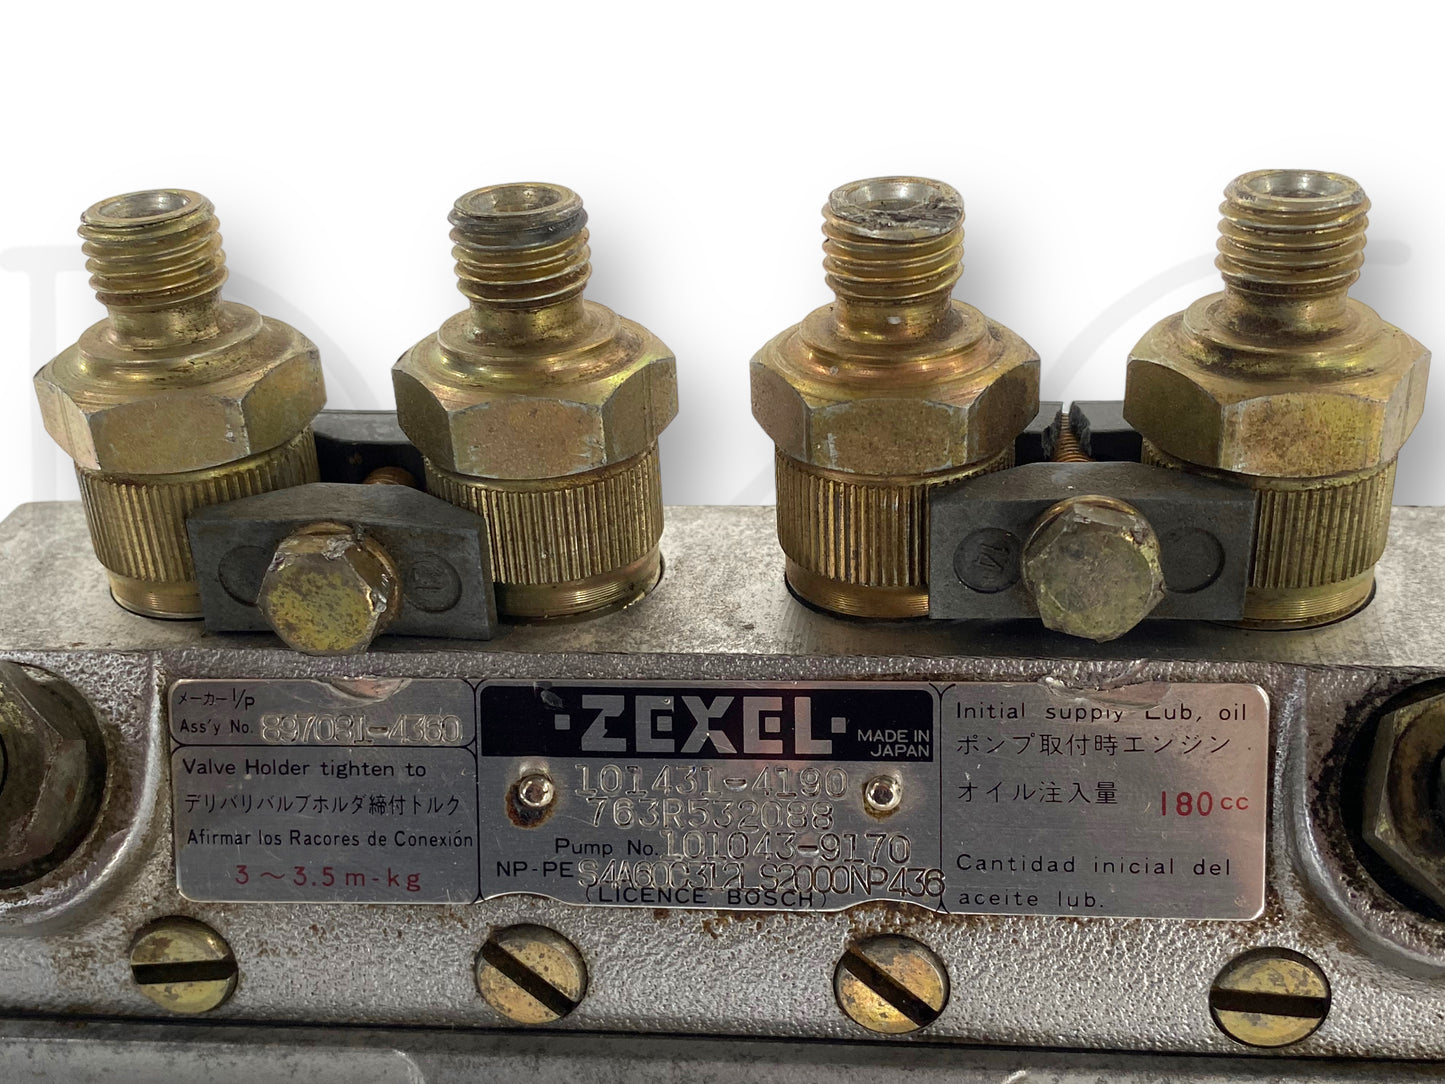 Isuzu Zexel Fuel Injection Pump 101043-9170  *Untested Core*